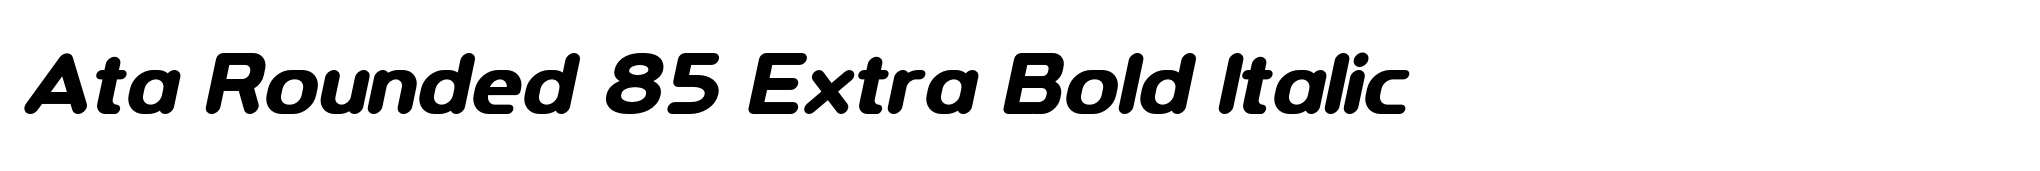 Ata Rounded 85 Extra Bold Italic image